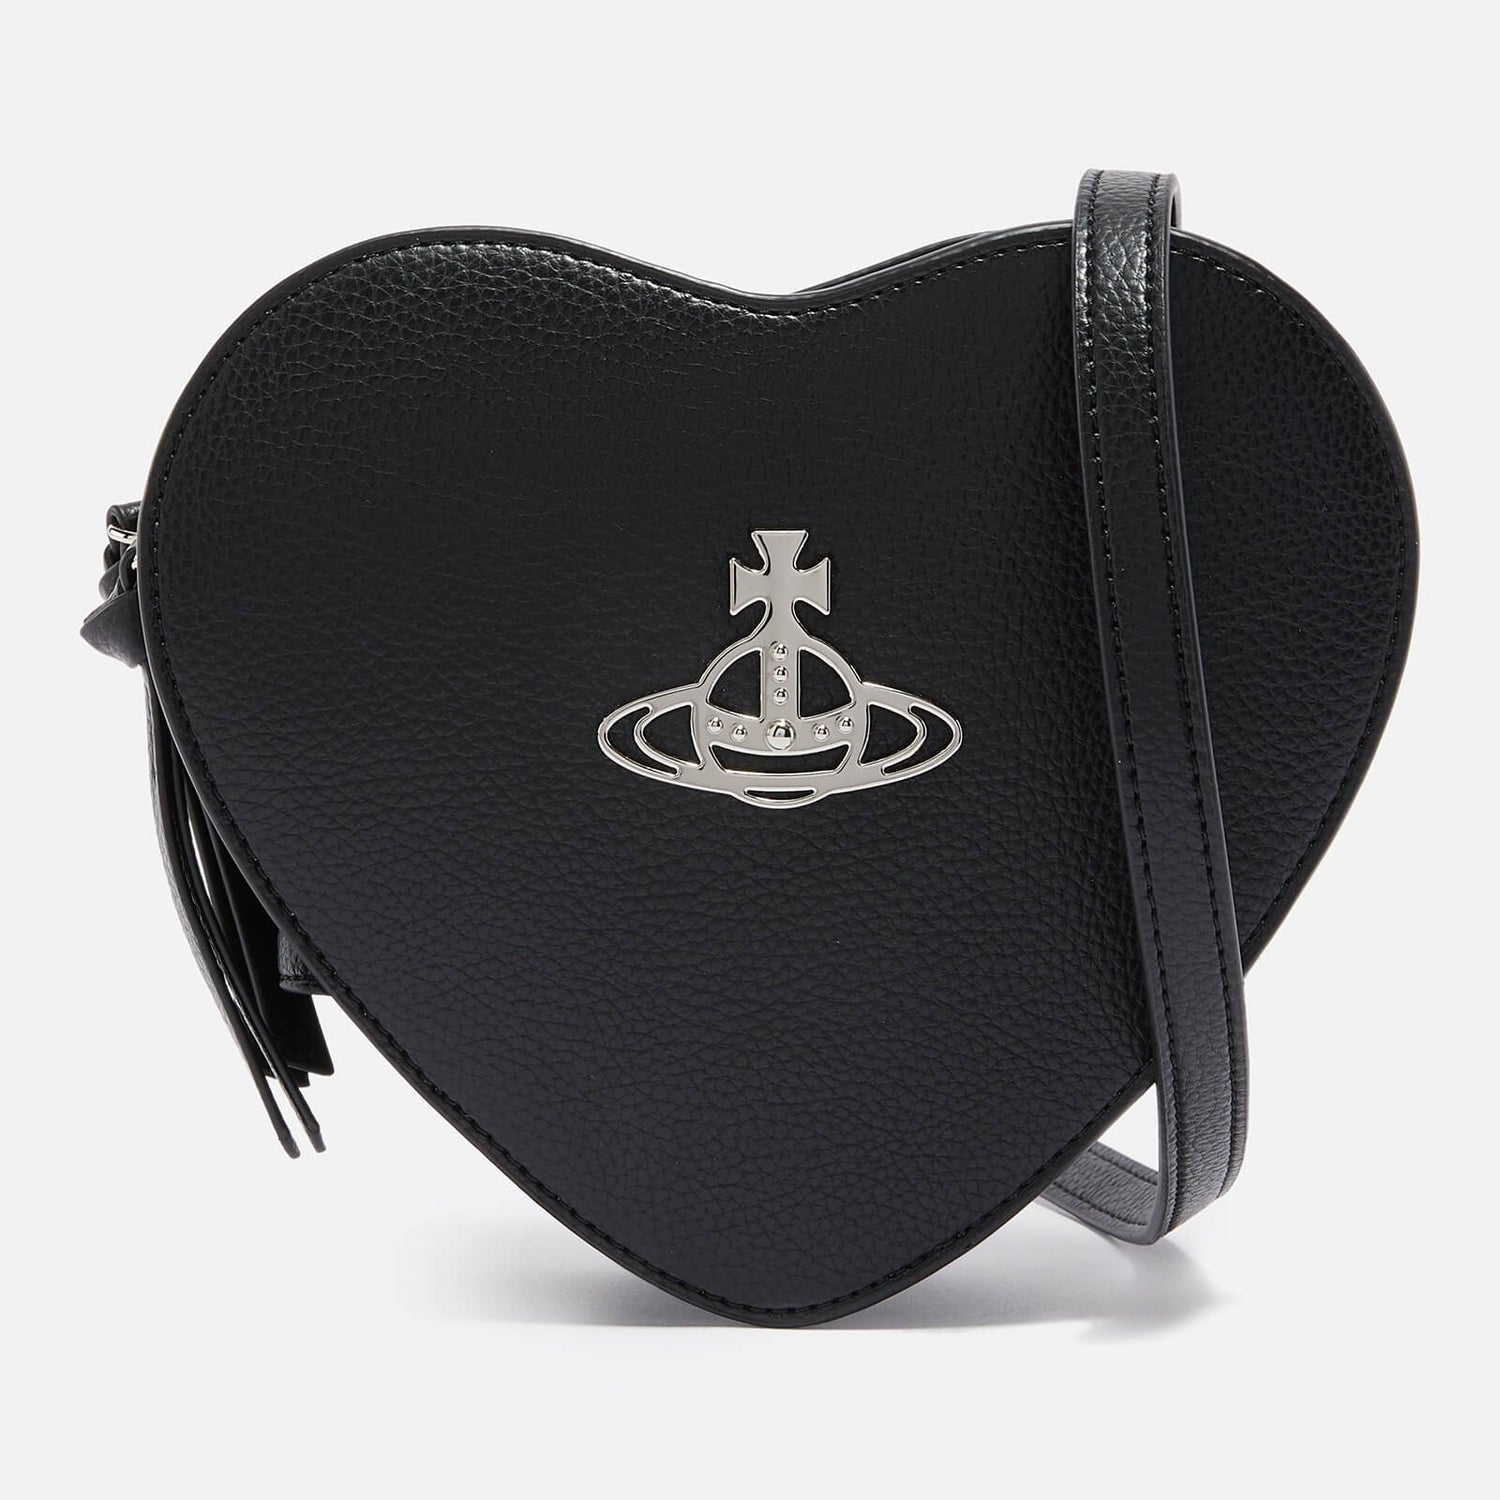 Vivienne Westwood Louise Vegan Leather Cross-Body Bag